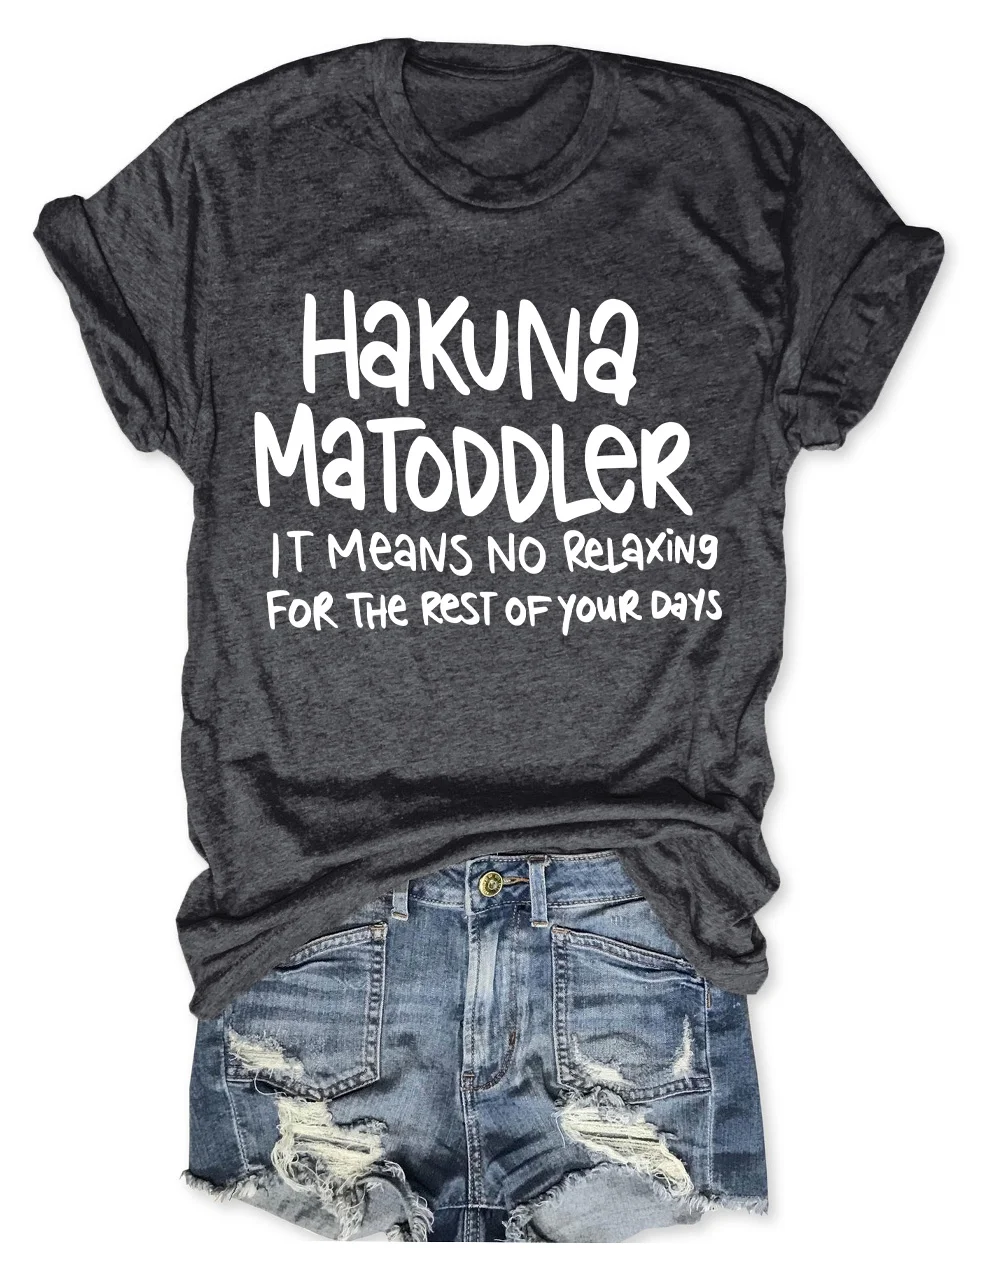 Hakuna Matoddler Funny Mom T-Shirt